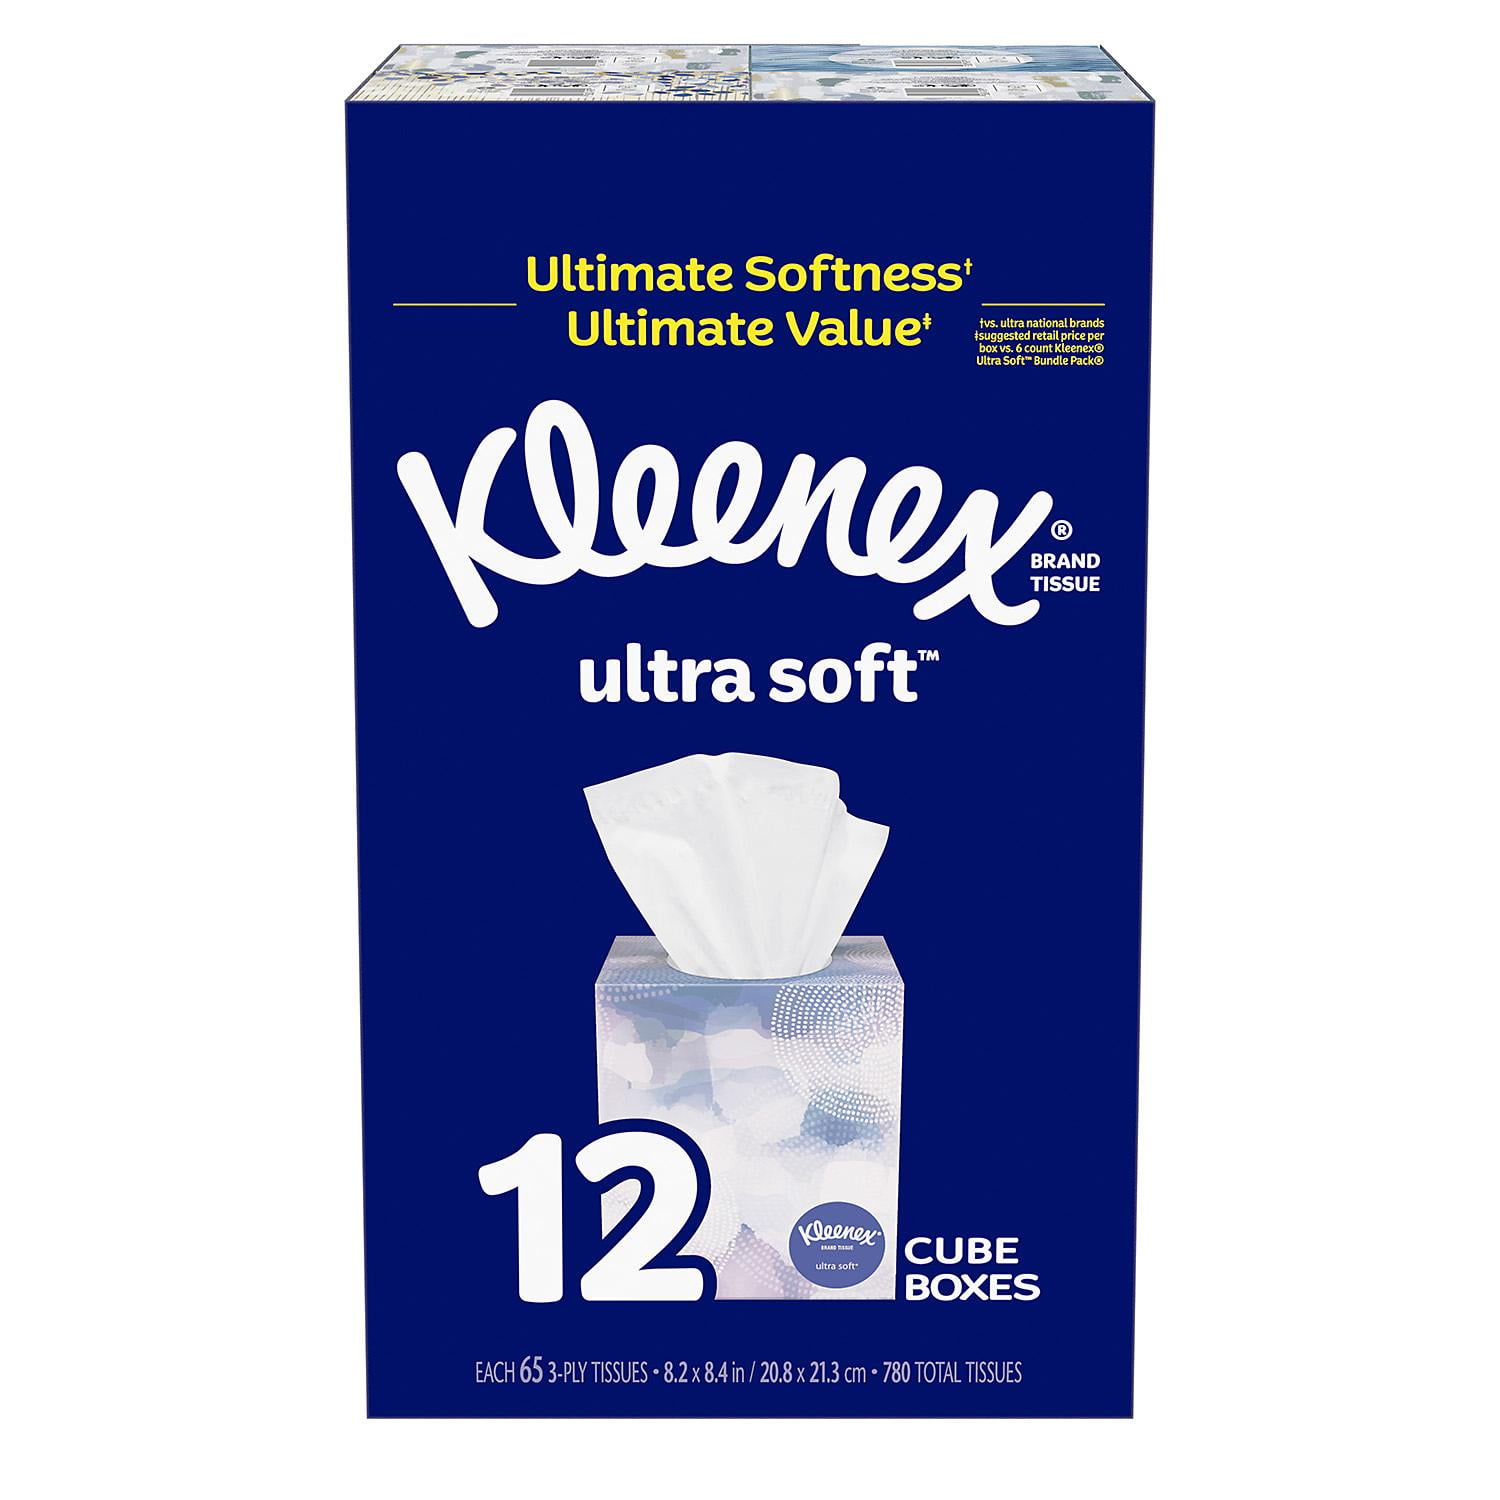 Lot of 3 Kleenex ultra soft facial tissue cube 